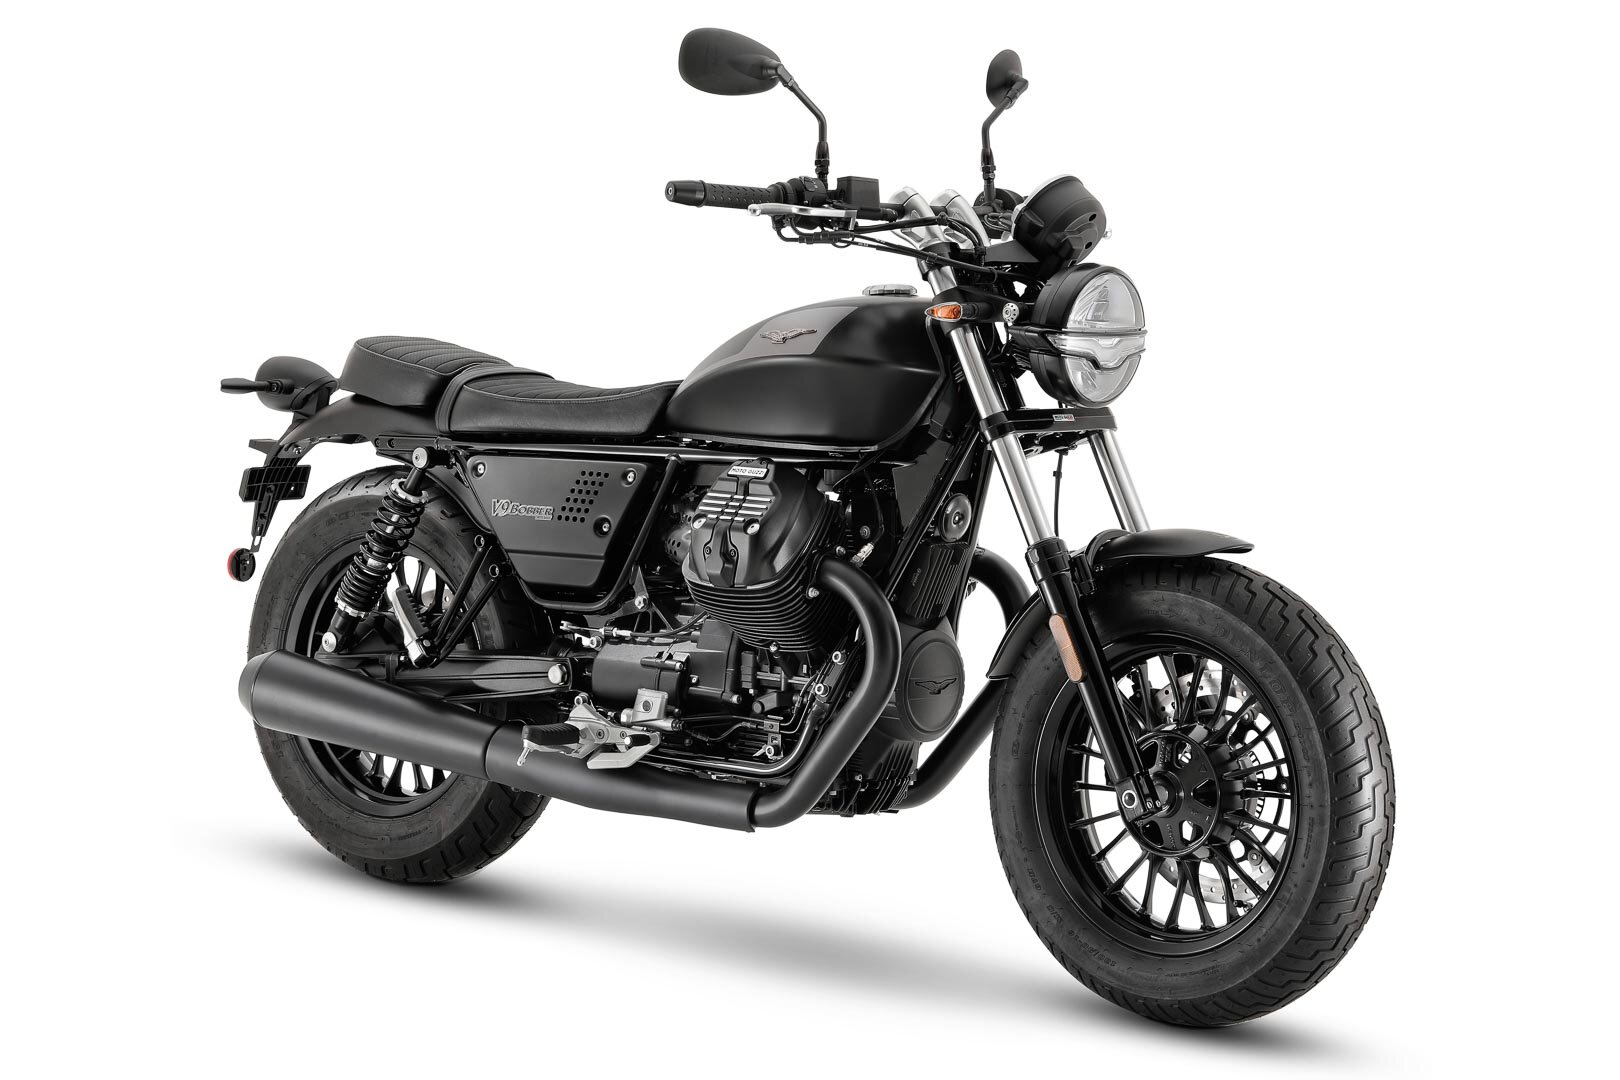 2021-Moto-Guzzi-V9-Bobber-First-Look-retro-cruiser-motorcycle-2.jpg